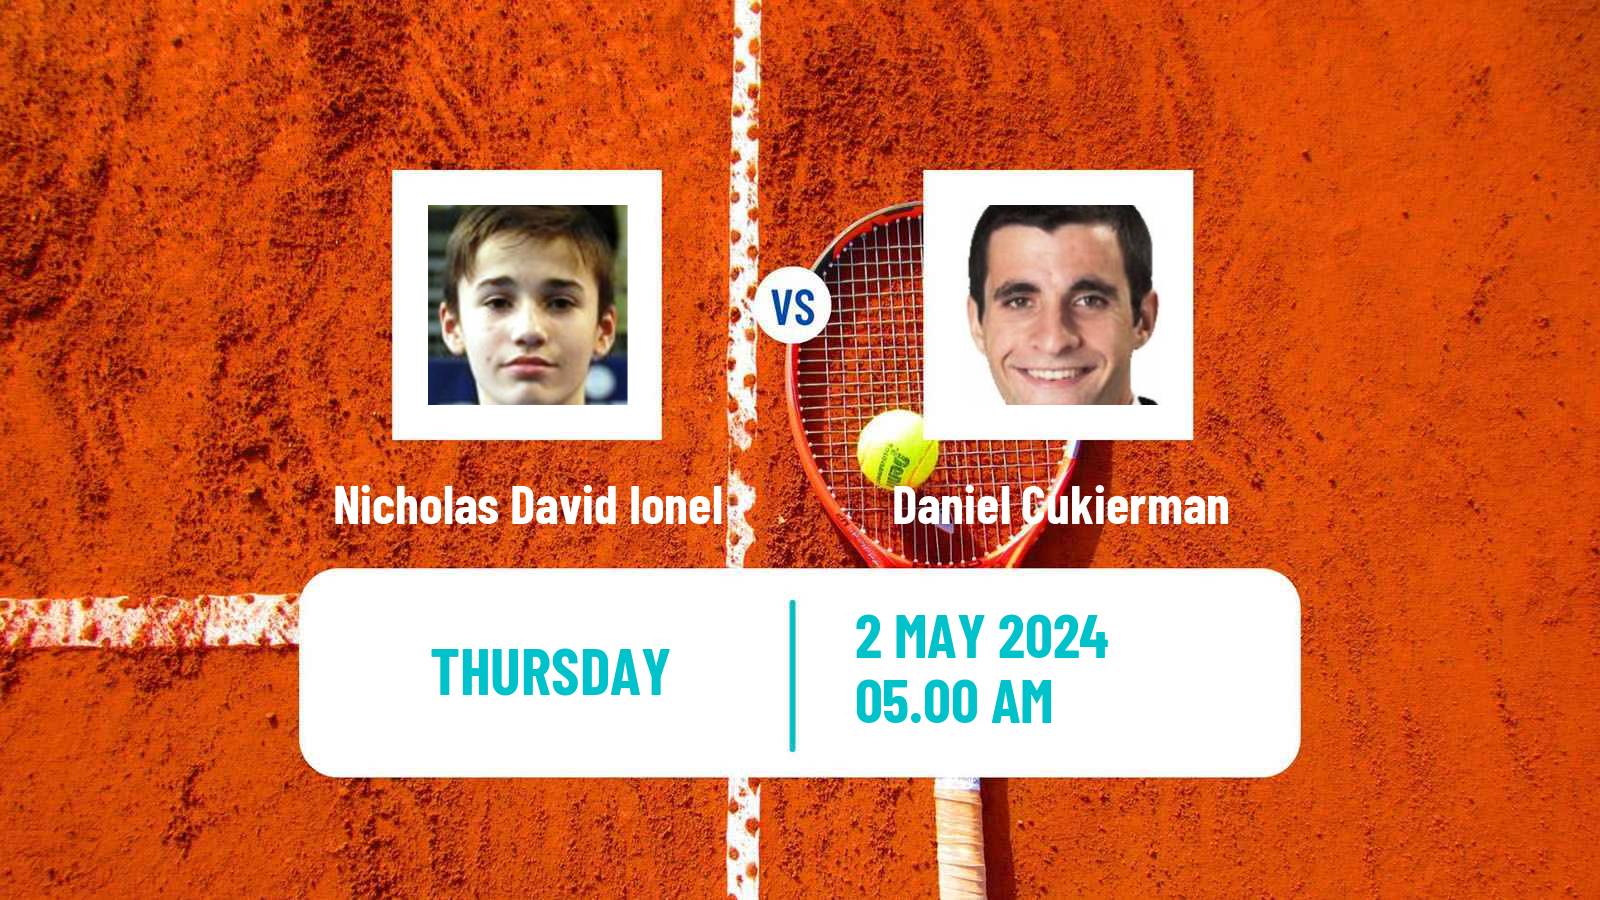 Tennis ITF M25 Sabadell Men Nicholas David Ionel - Daniel Cukierman